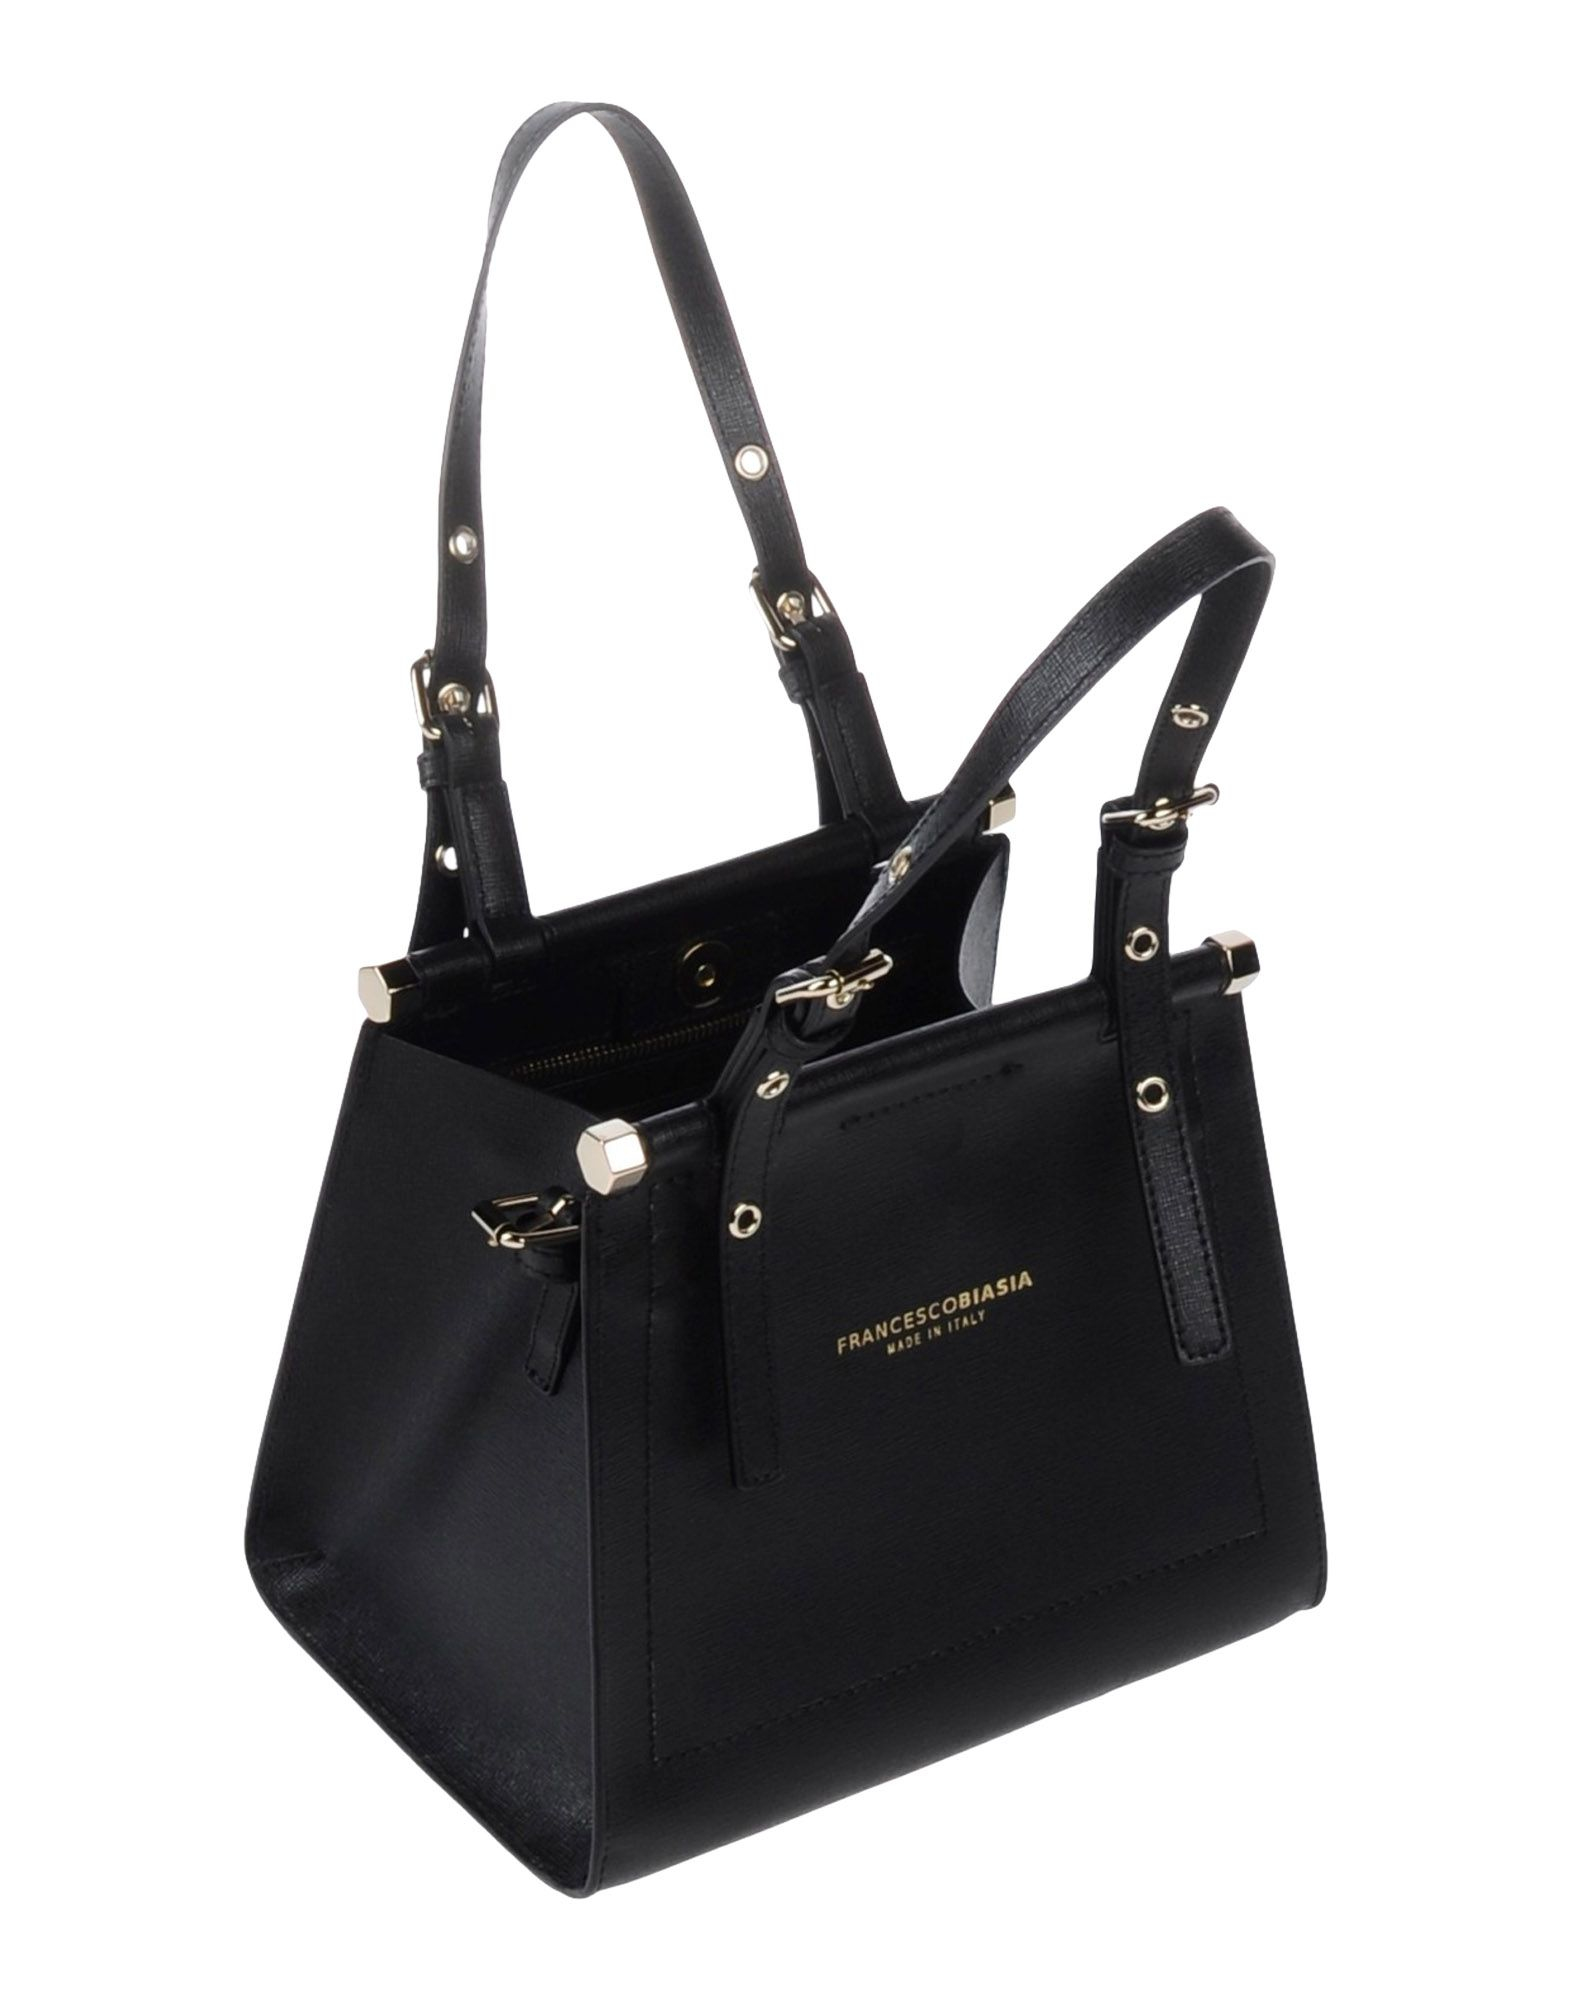 Francesco biasia Handbag in Black | Lyst